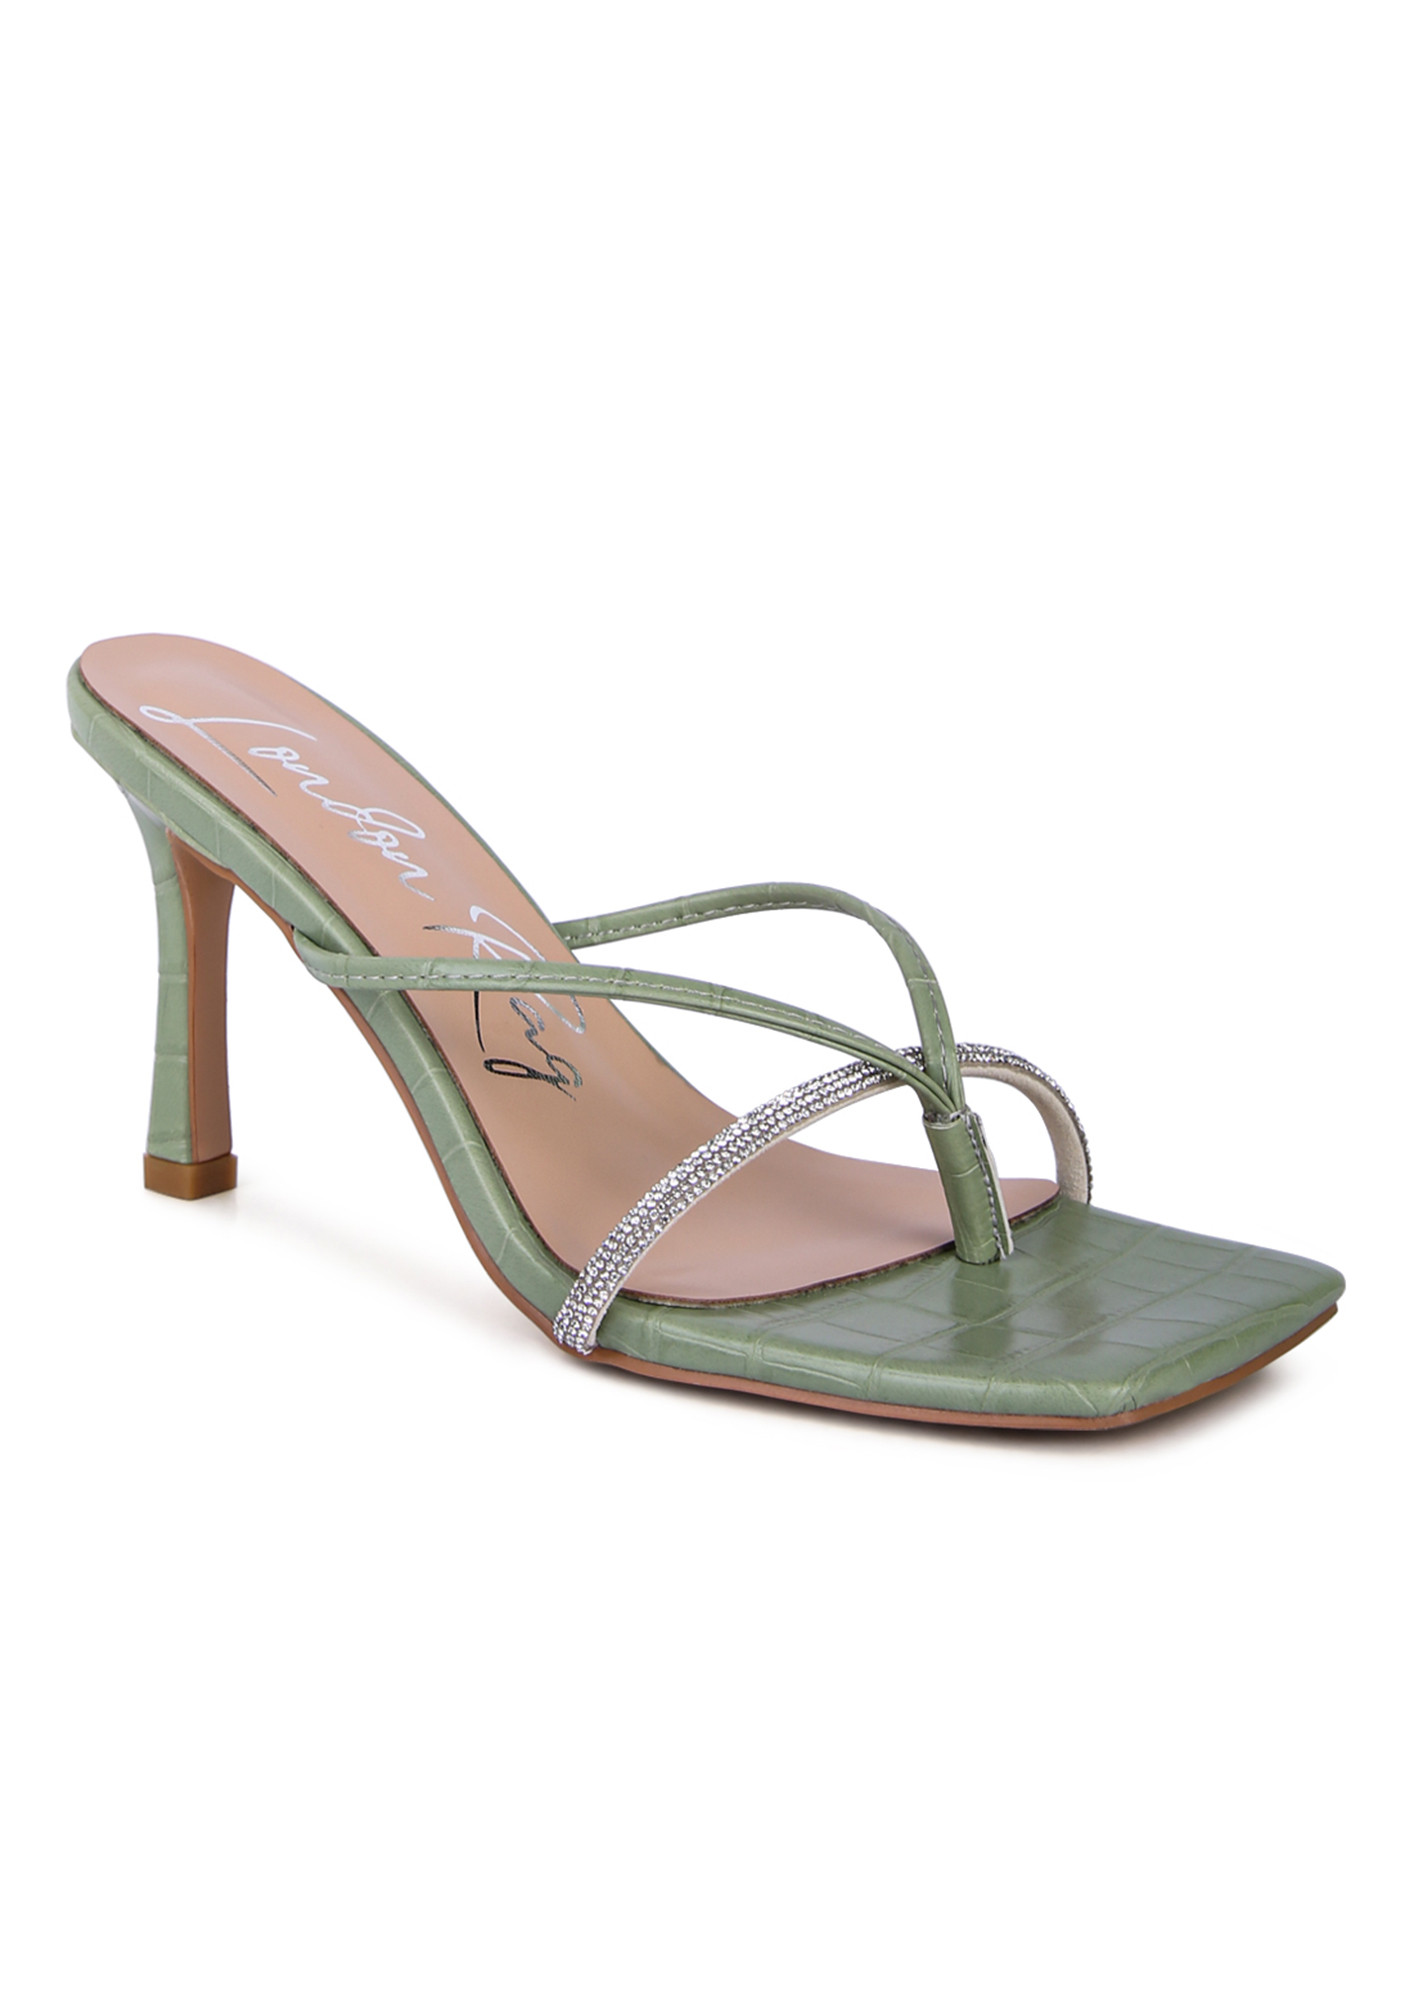 Croc Rhinestone Slider Sandal in Mint